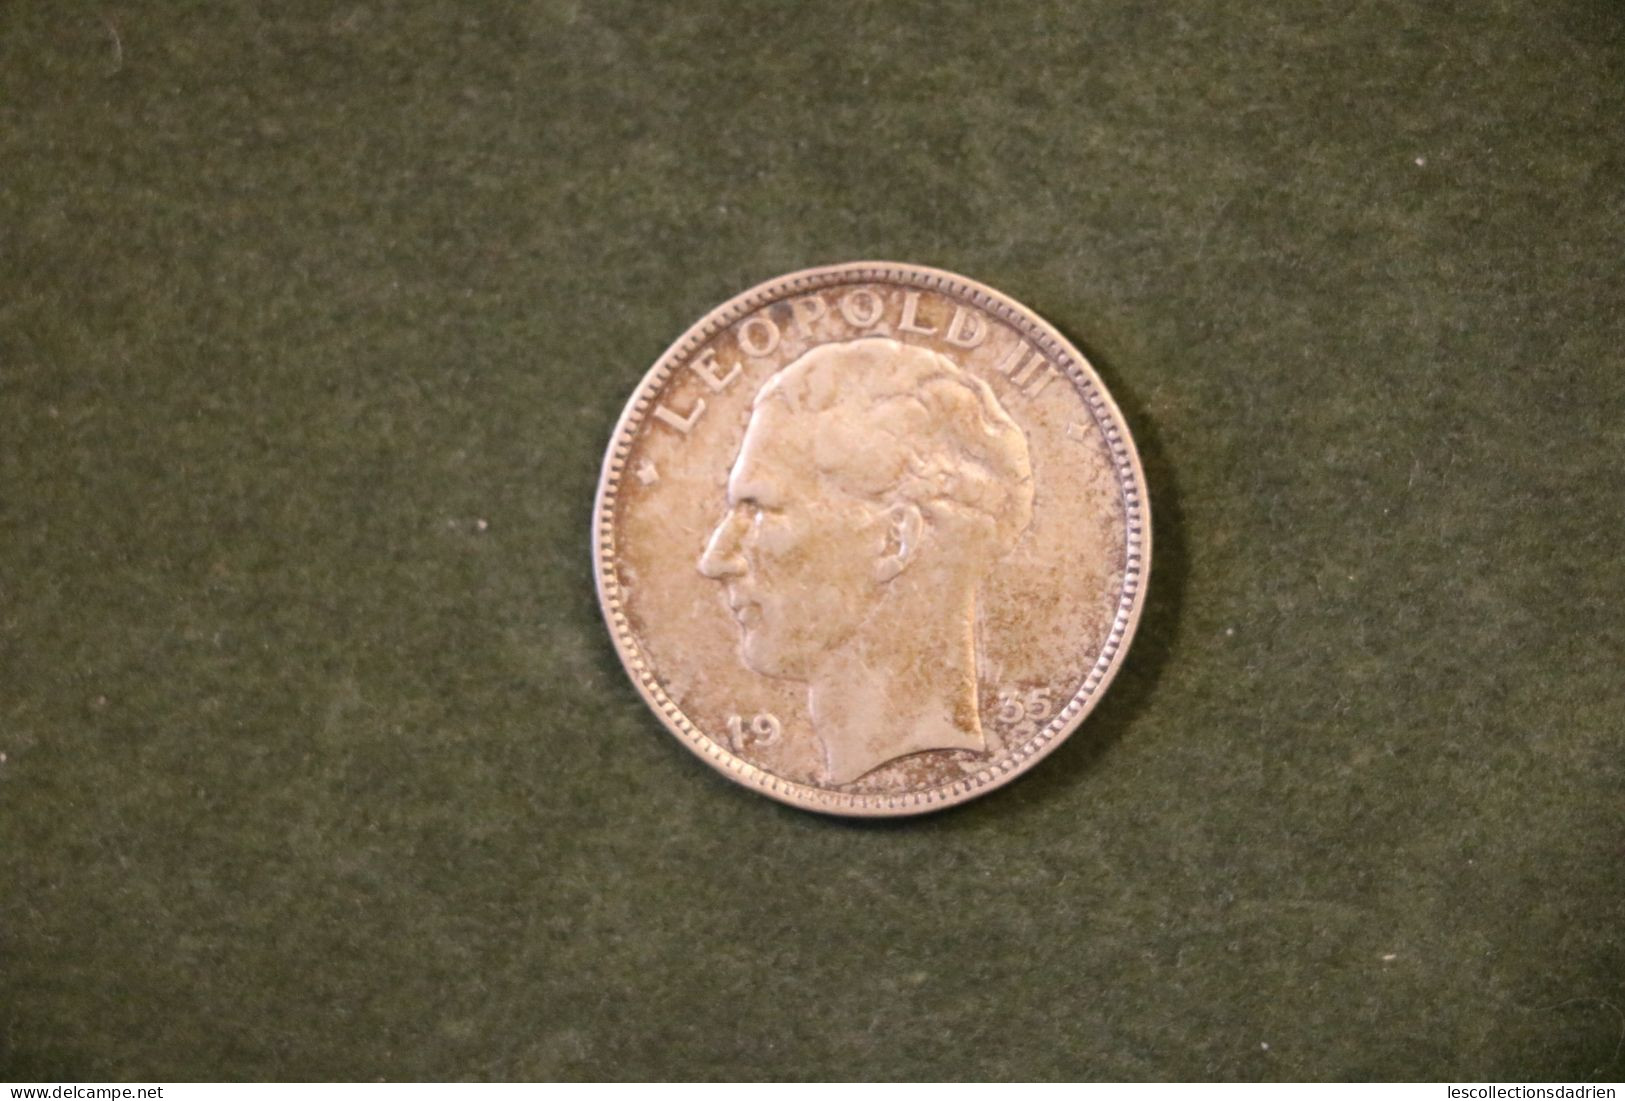 Pièce En Argent Belgique 20 Francs 1935  -  Belgian Silver Coin /2 - 20 Francs